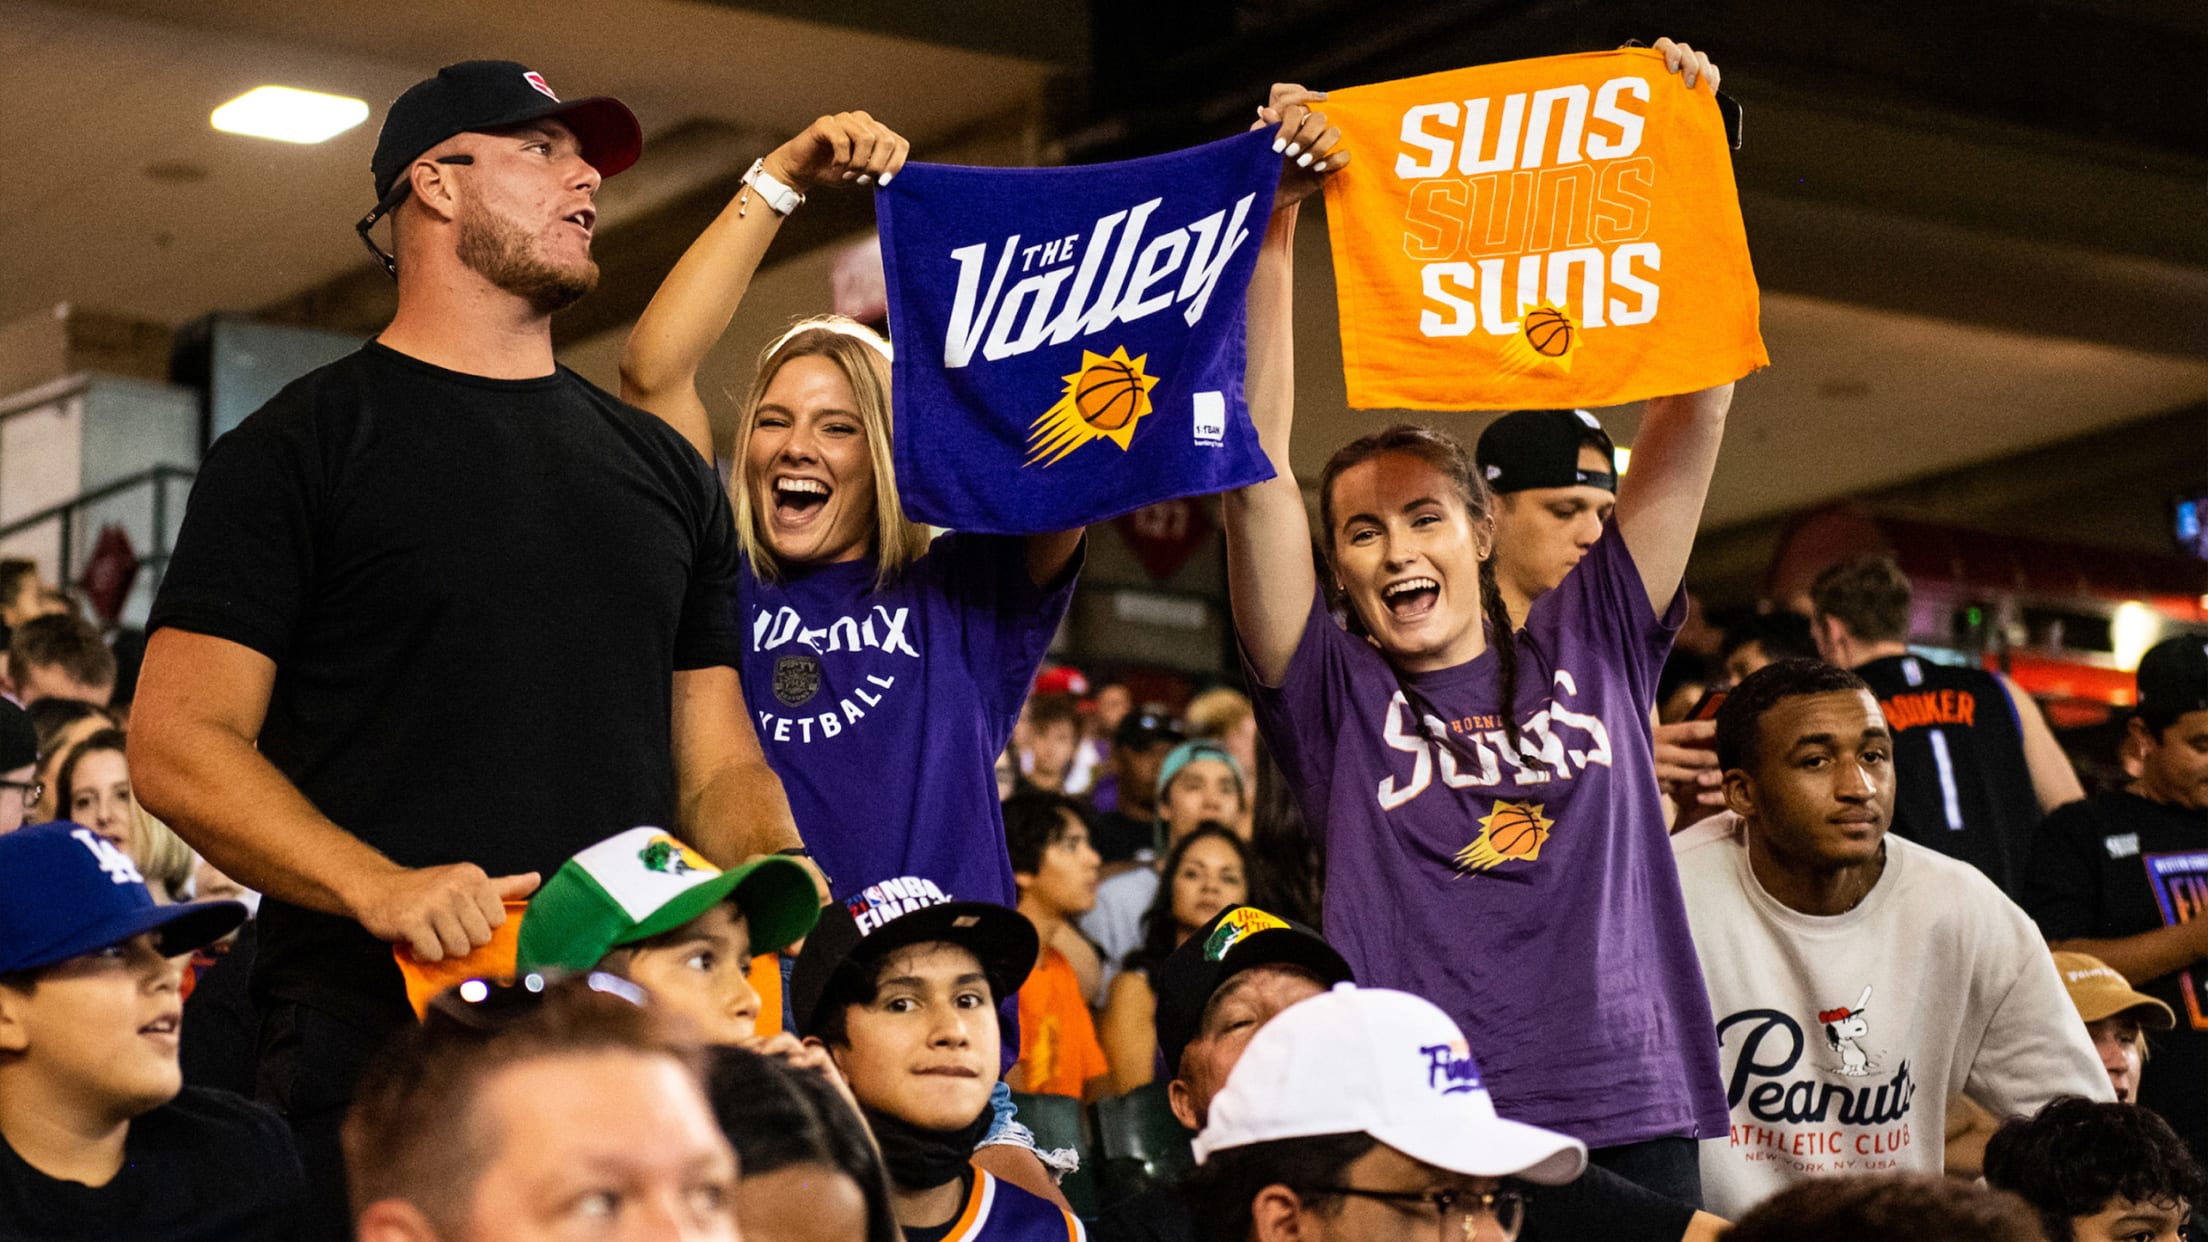 Arizona Diamondbacks on X: #InThe90sWeAsked the @Suns to model